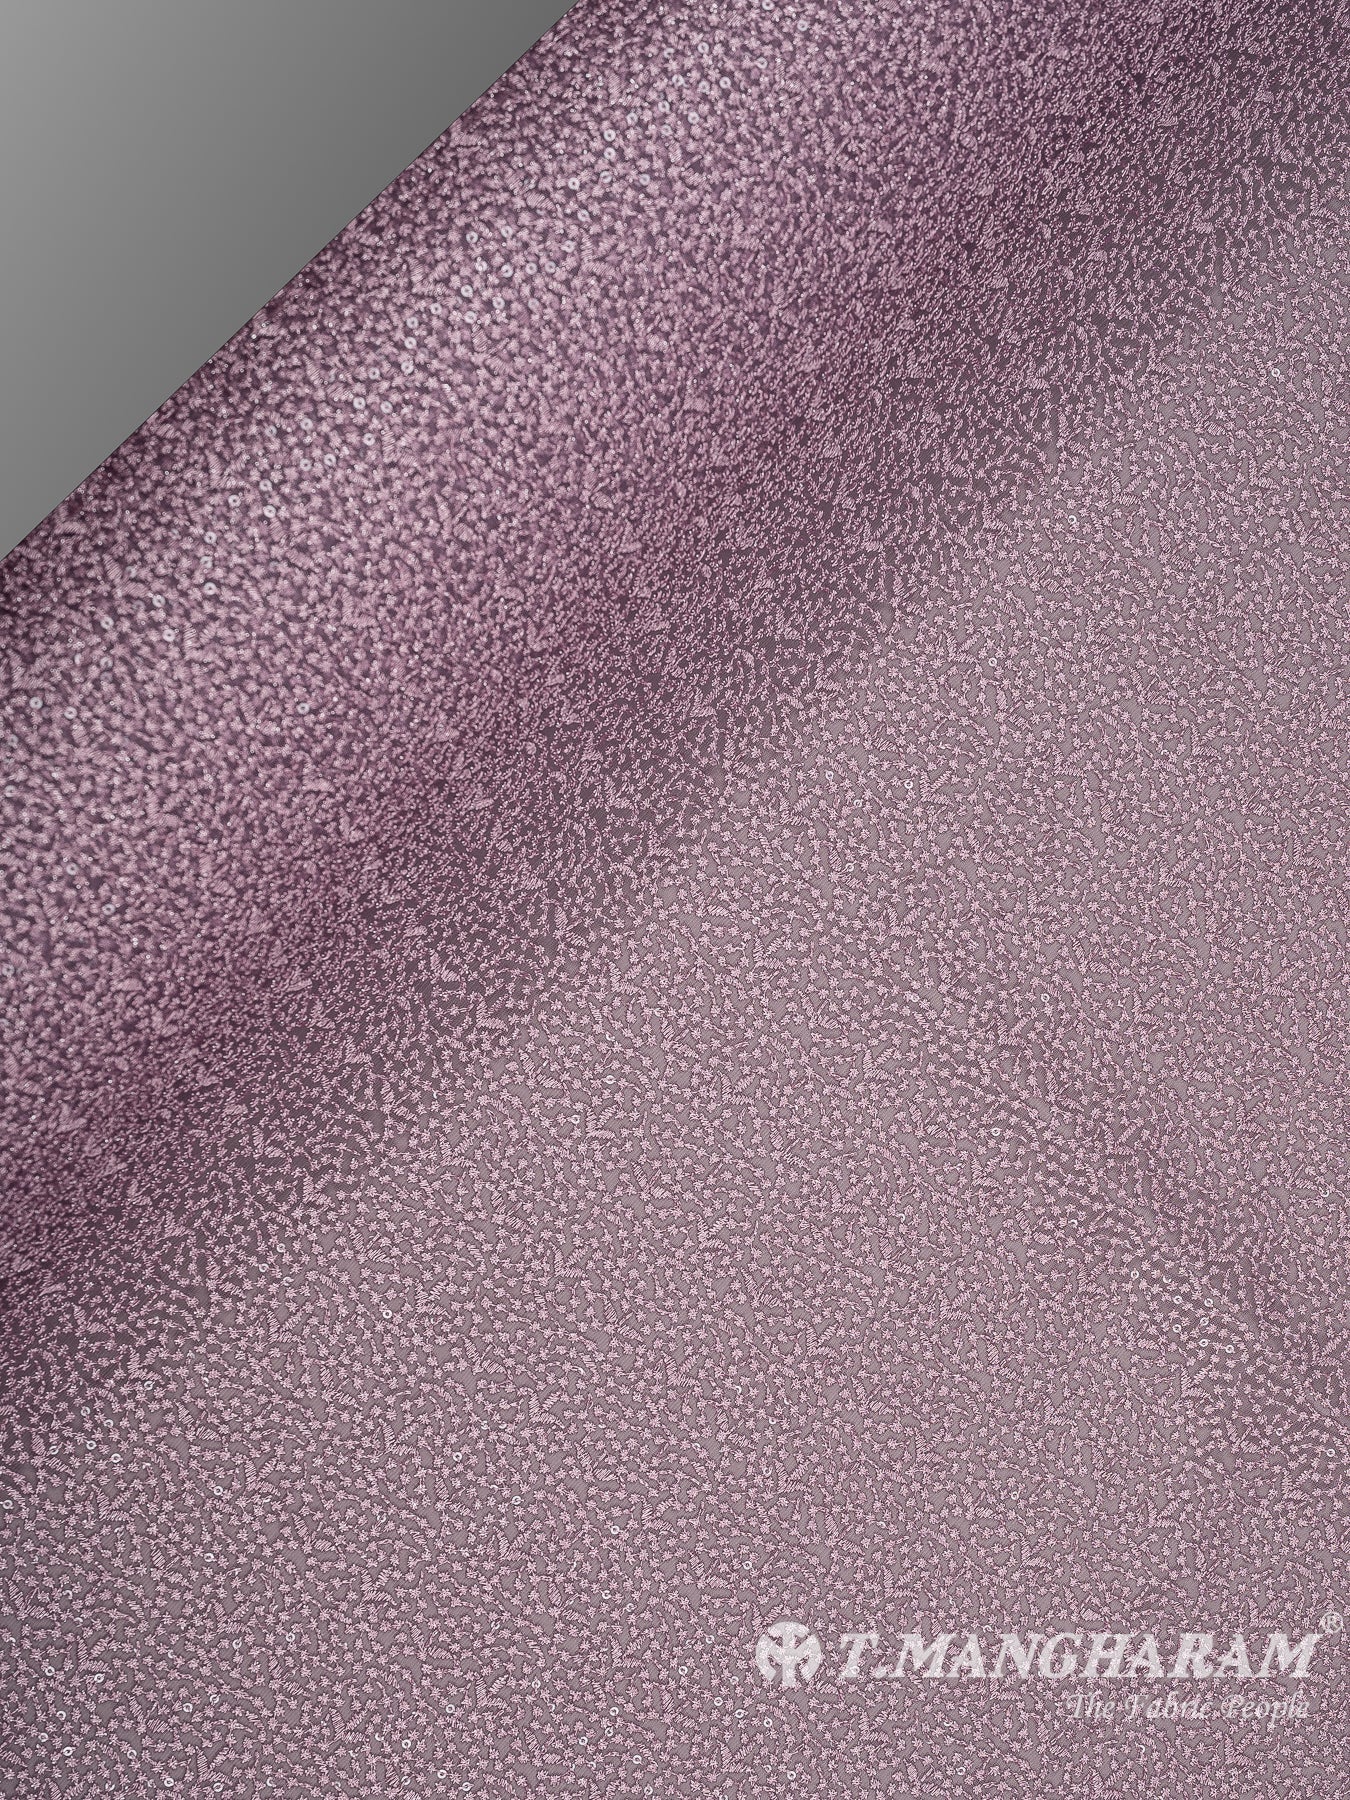 Violet Net Fabric - EB6593 view-2